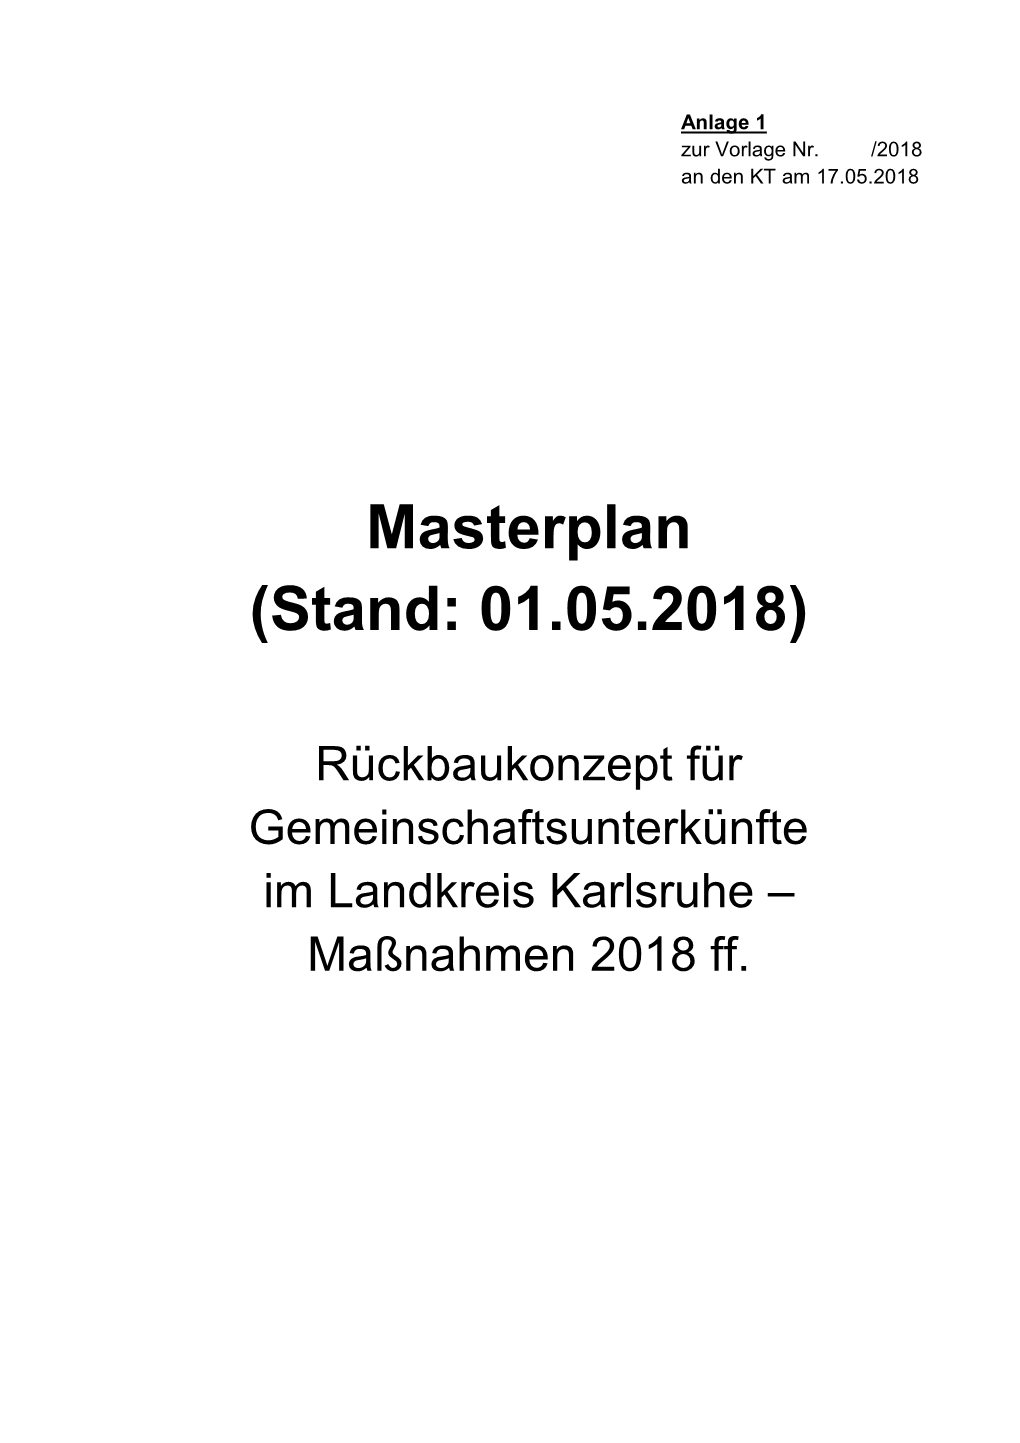 Masterplan (Stand: 01.05.2018)